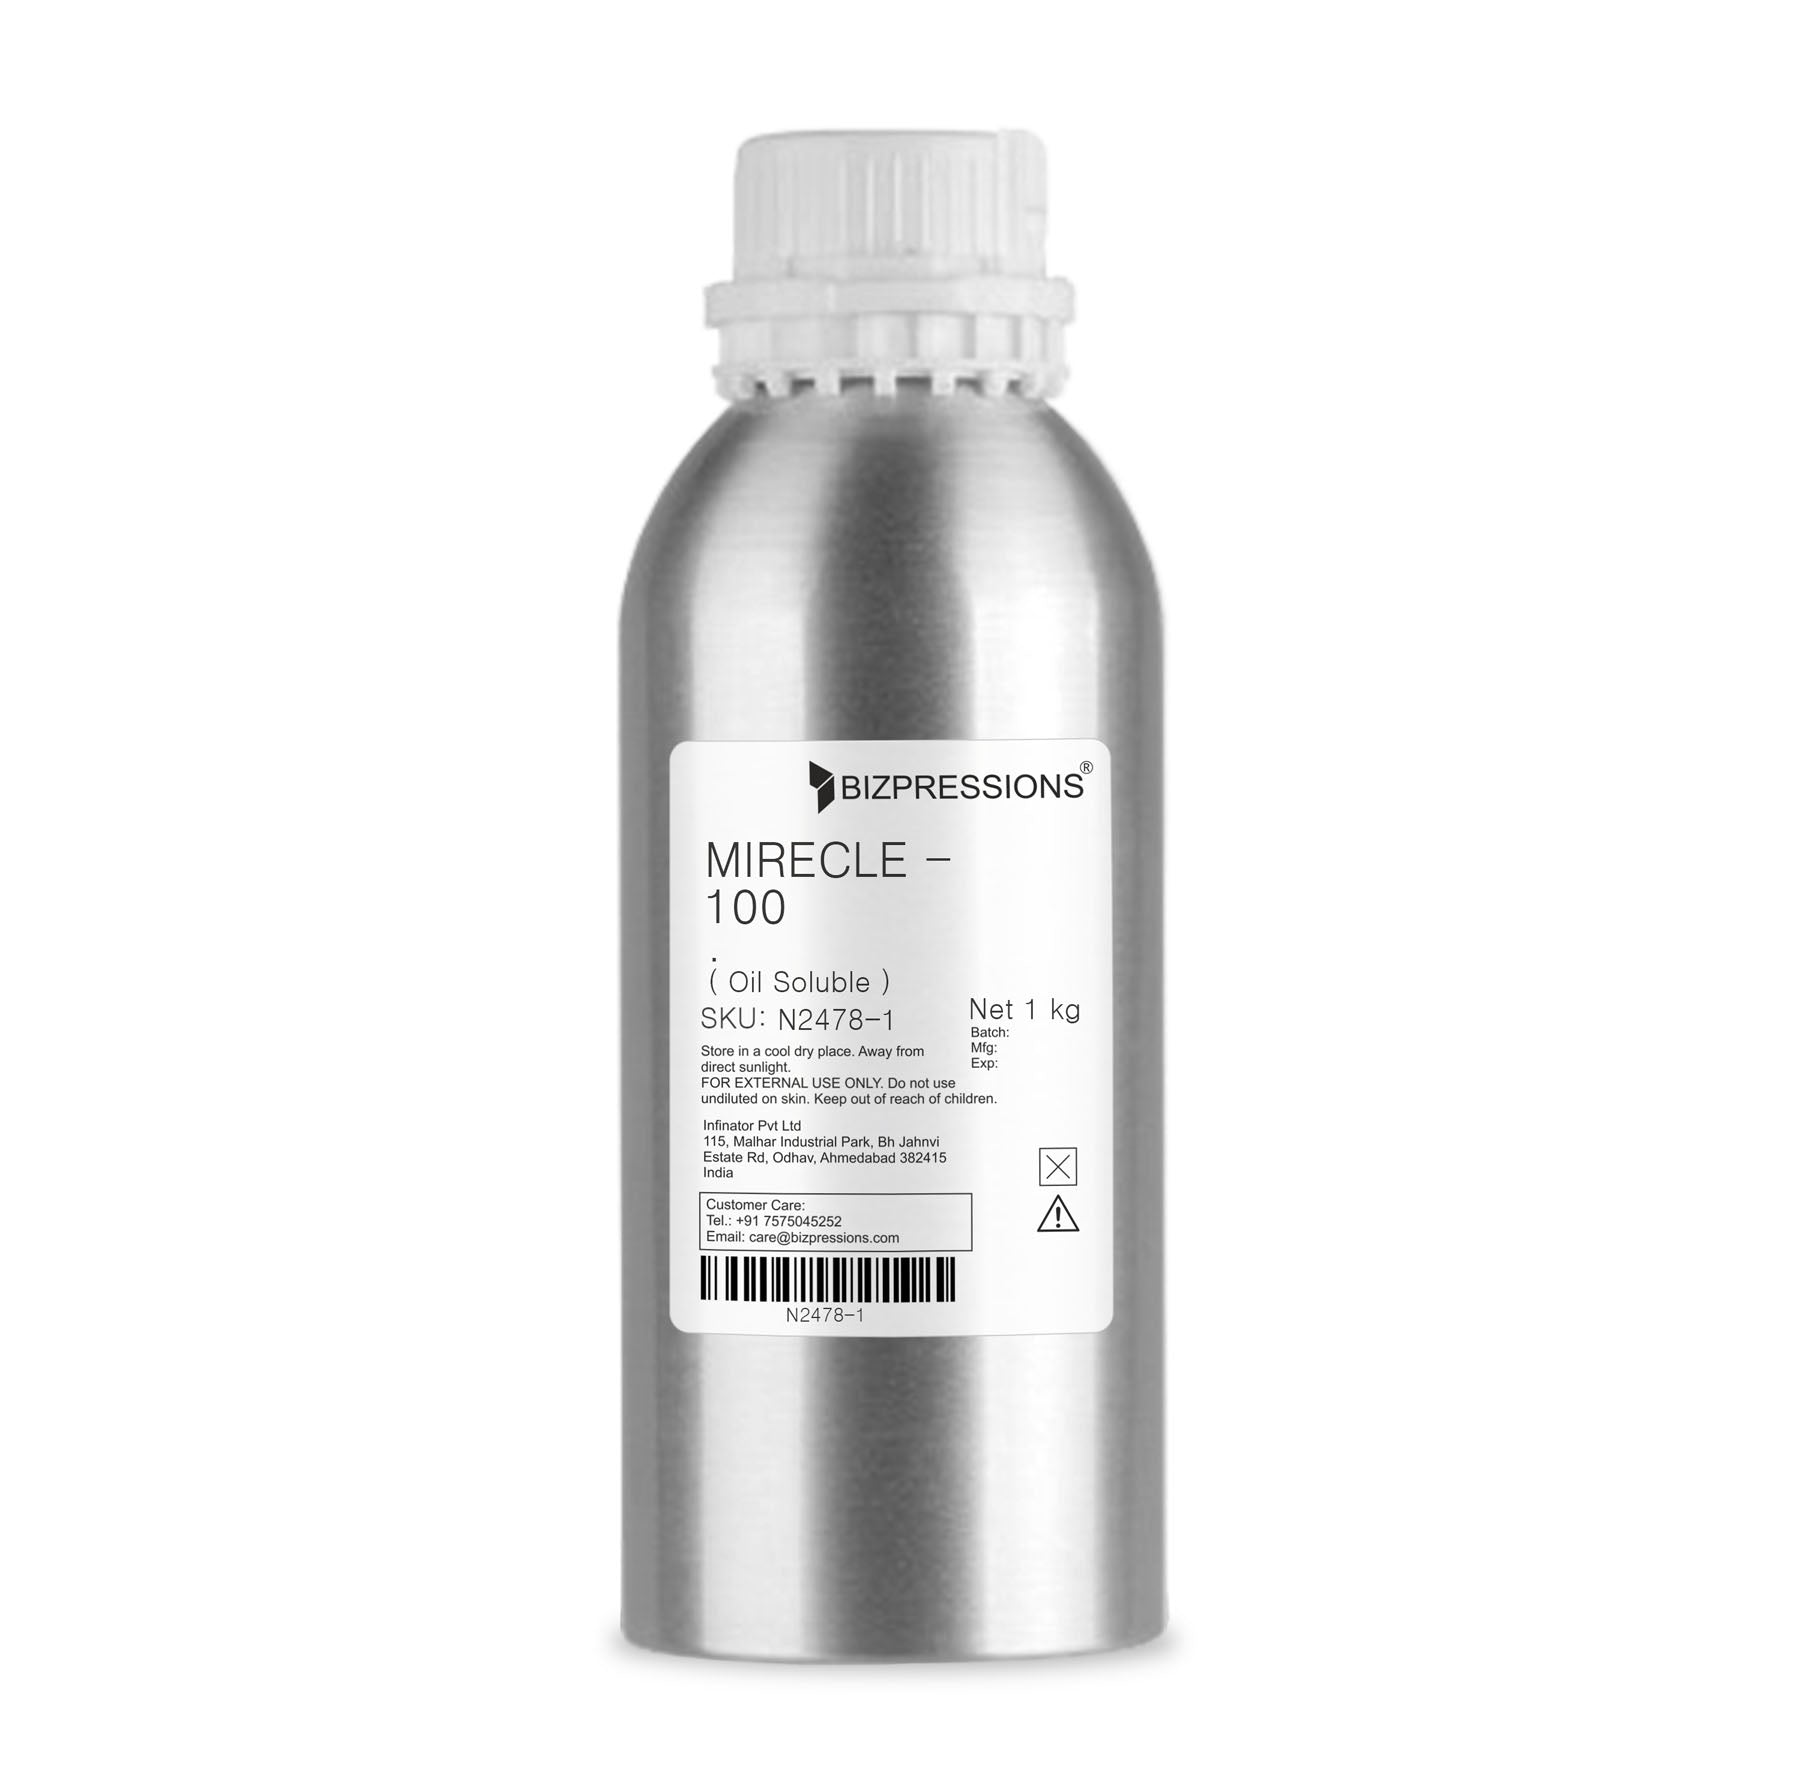 MIRECLE - 100 - Fragrance ( Oil Soluble ) - 1 kg